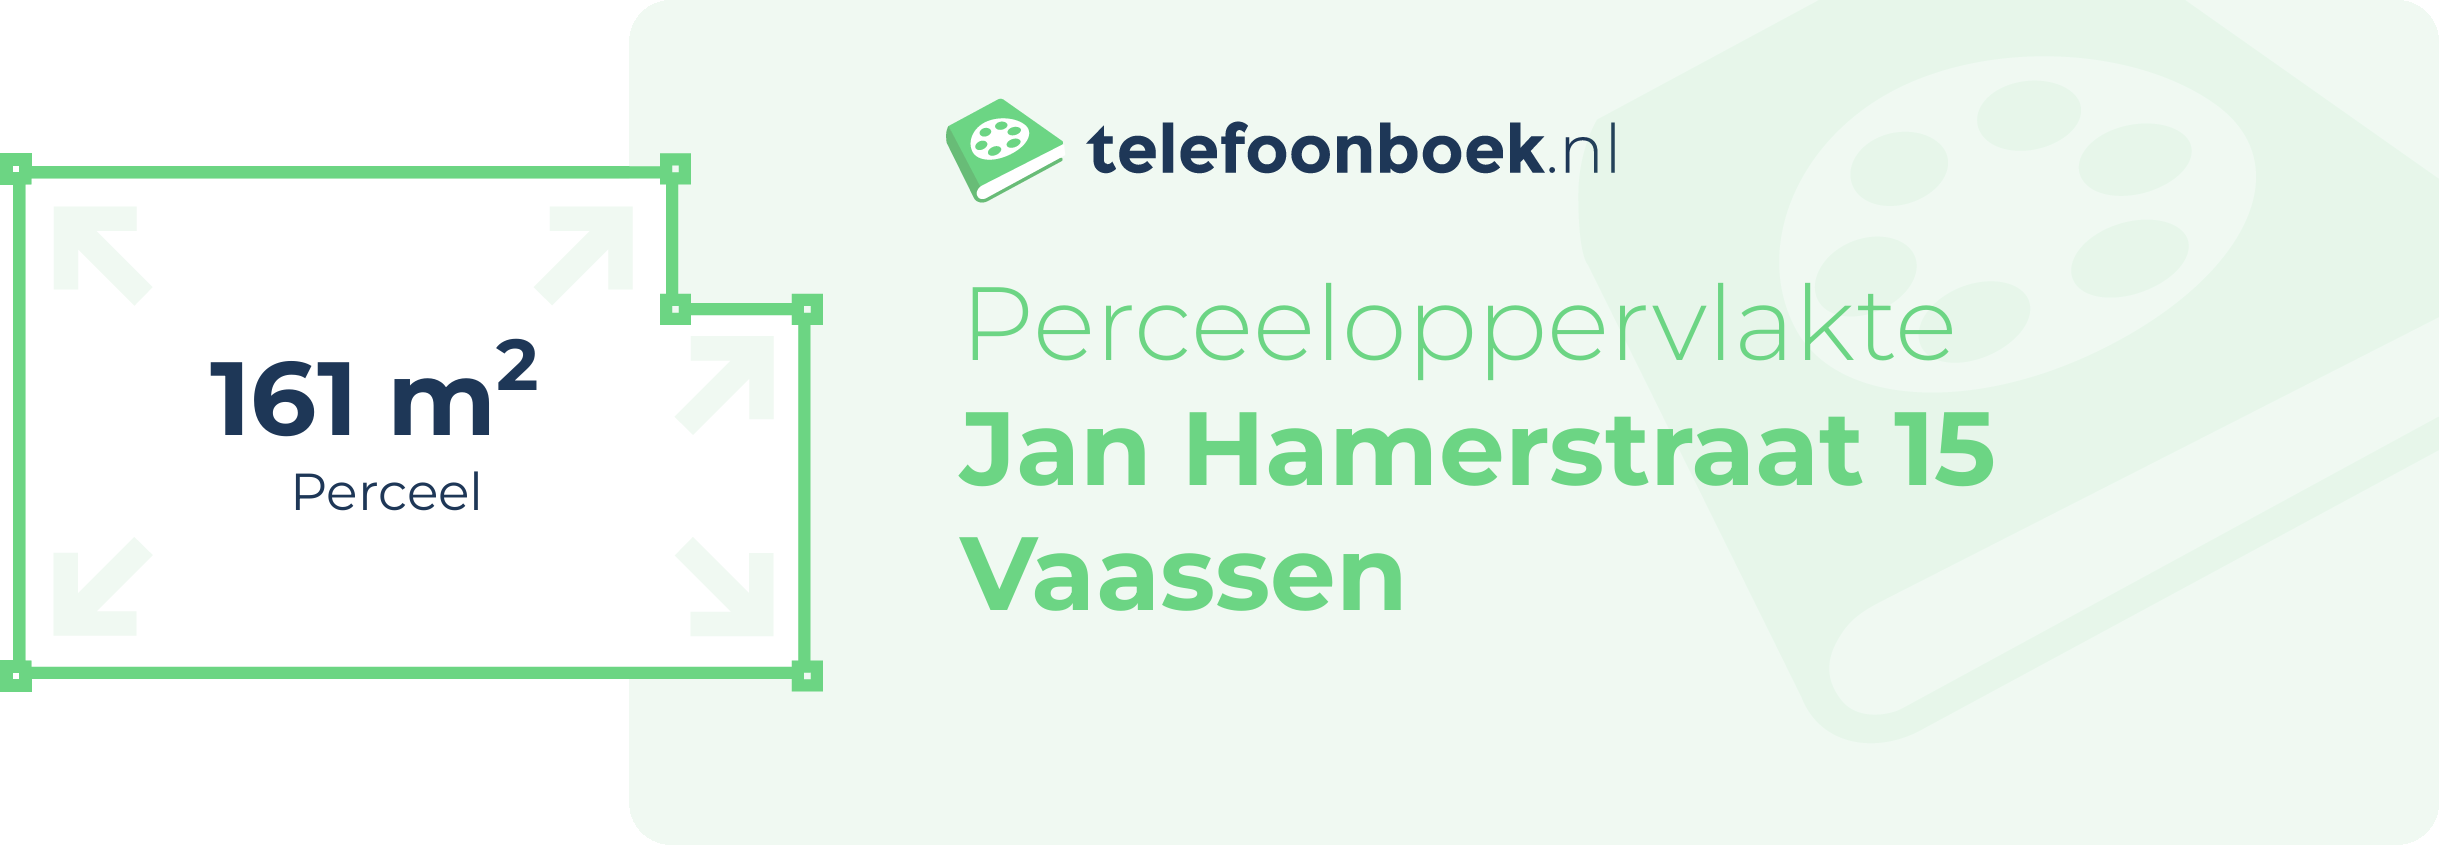 Perceeloppervlakte Jan Hamerstraat 15 Vaassen